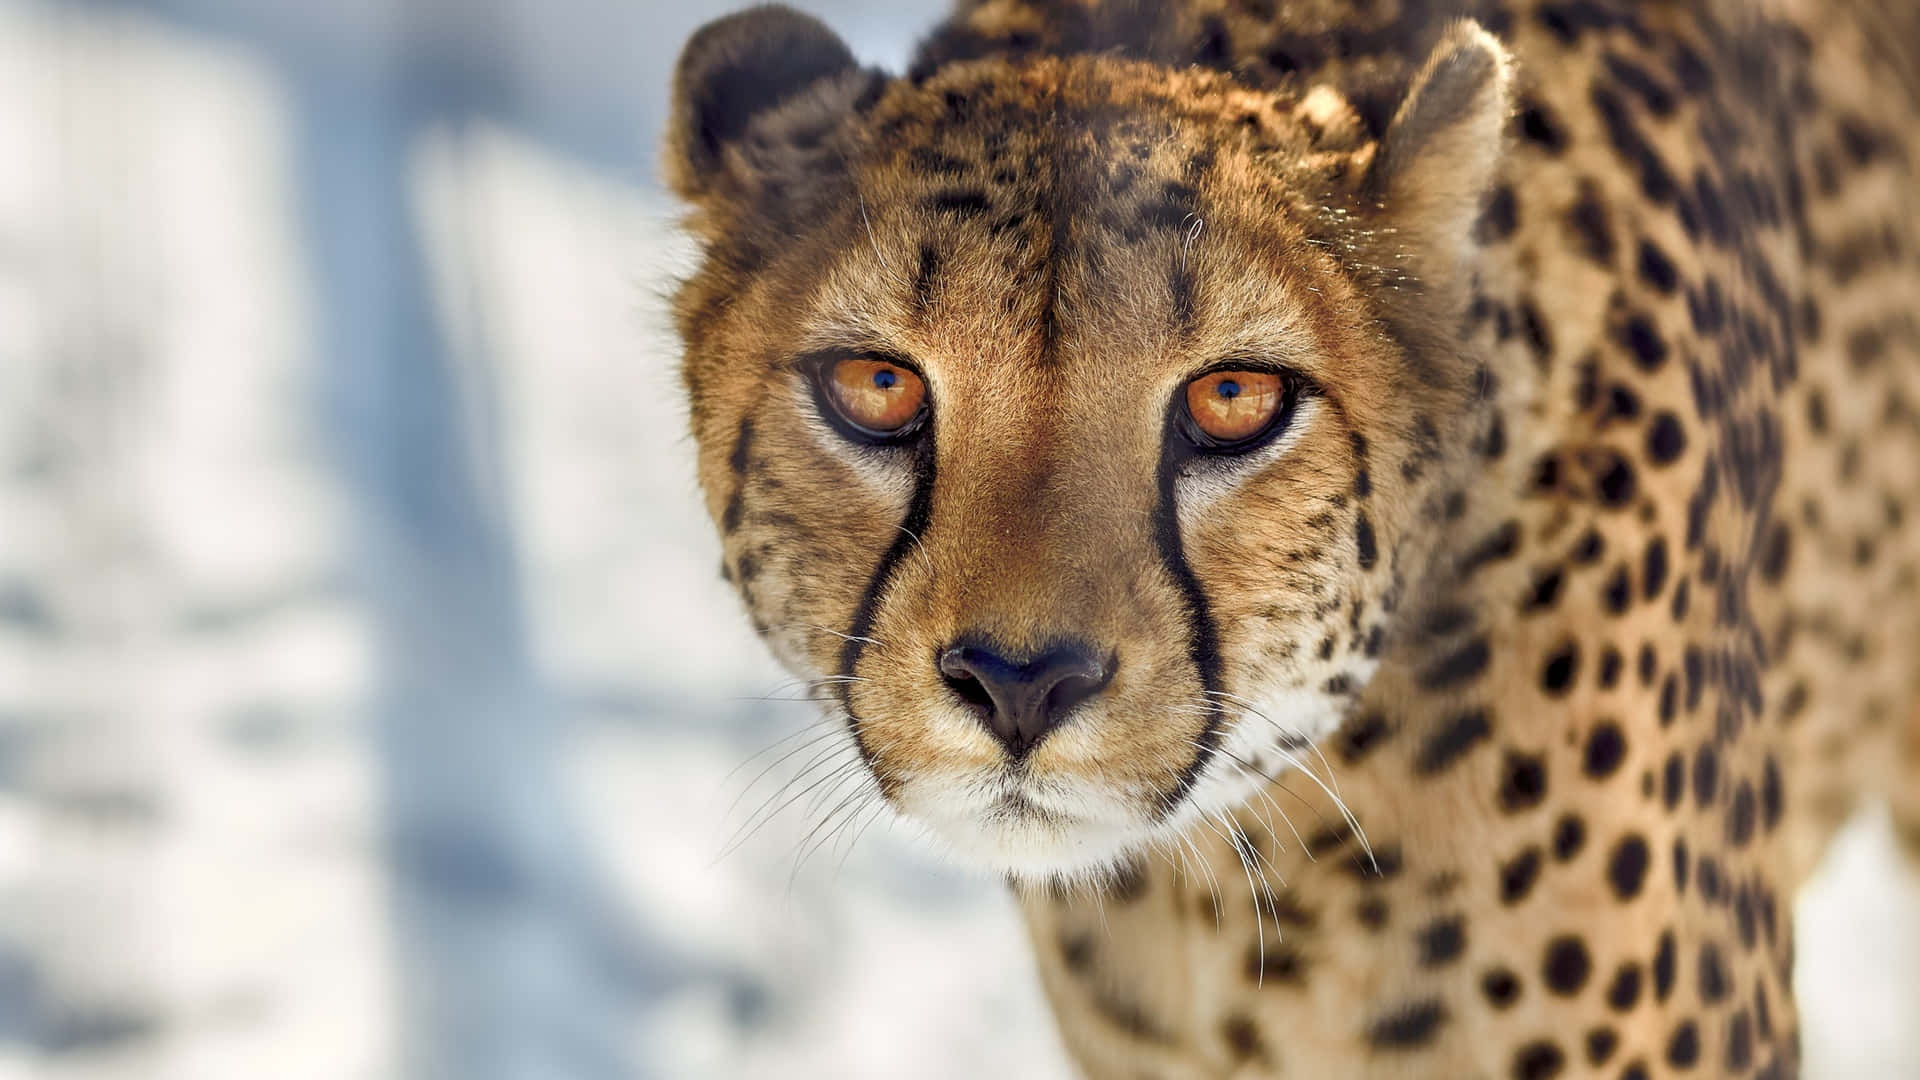 Unprimer Plano De Un Cheetah Poderoso Y Majestuoso En La Dorada Sabana Africana. Fondo de pantalla